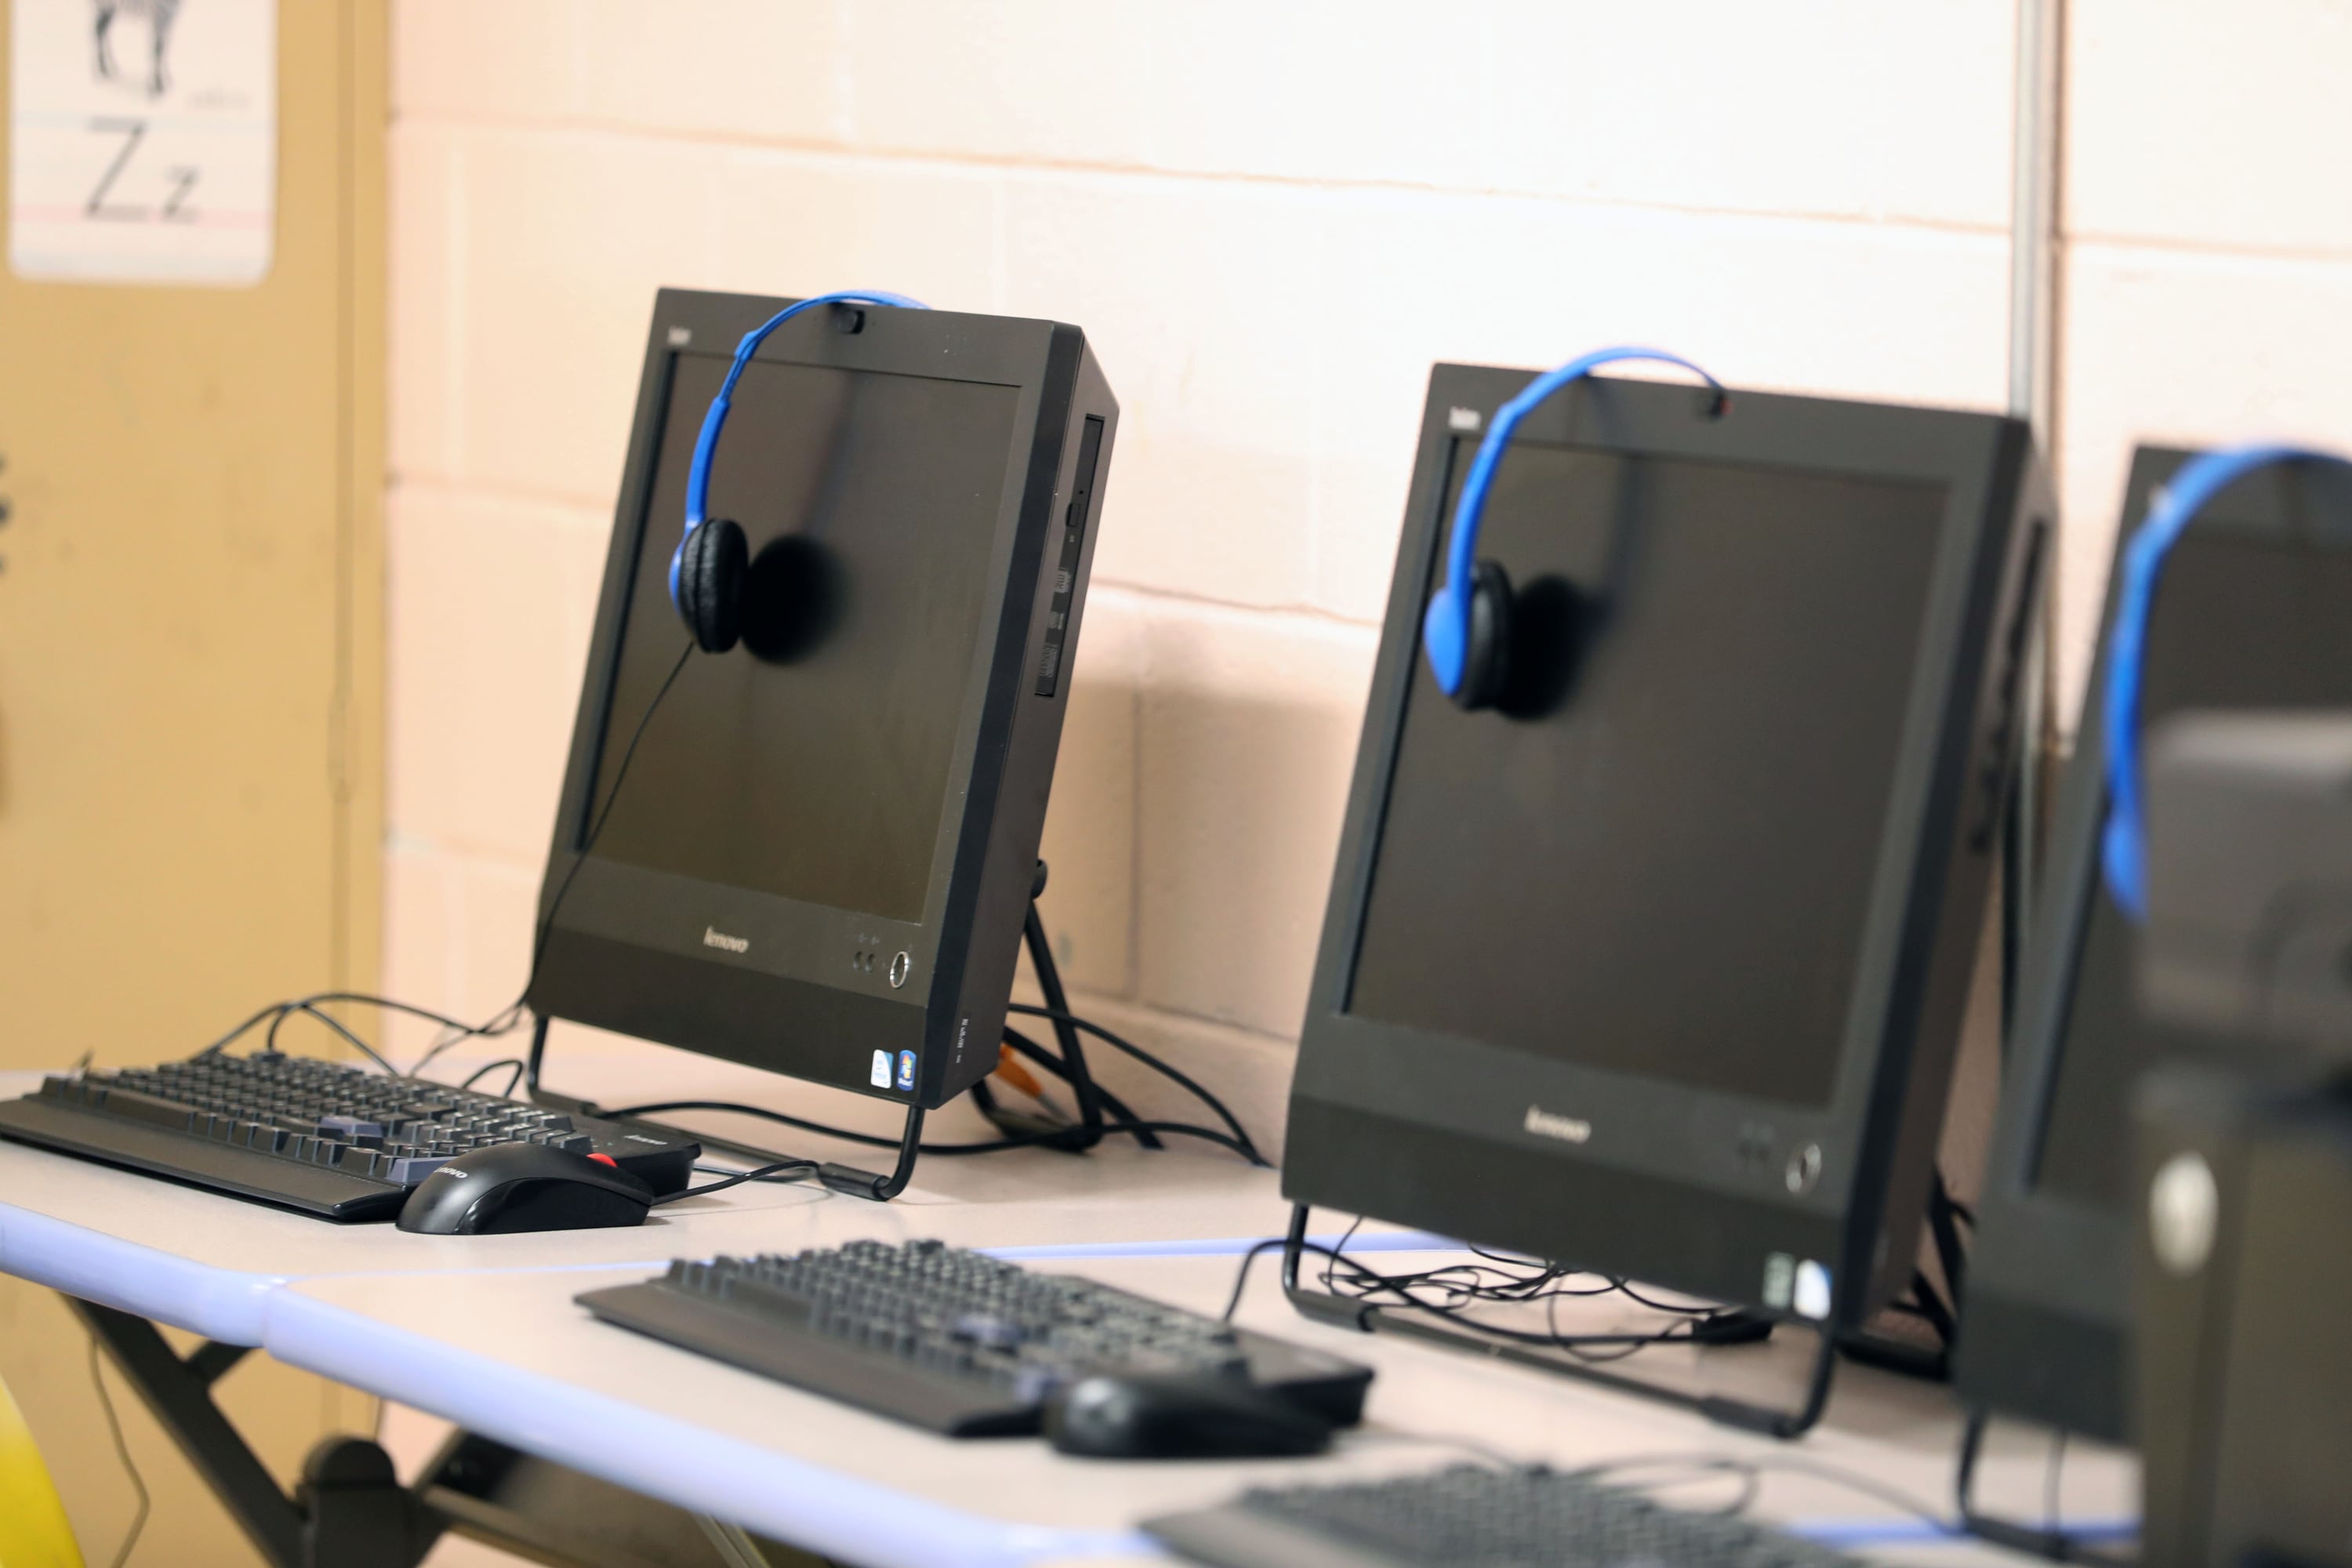 Desktop computers and headphones at Gardenview Elementary School in Memphis, Tennessee.